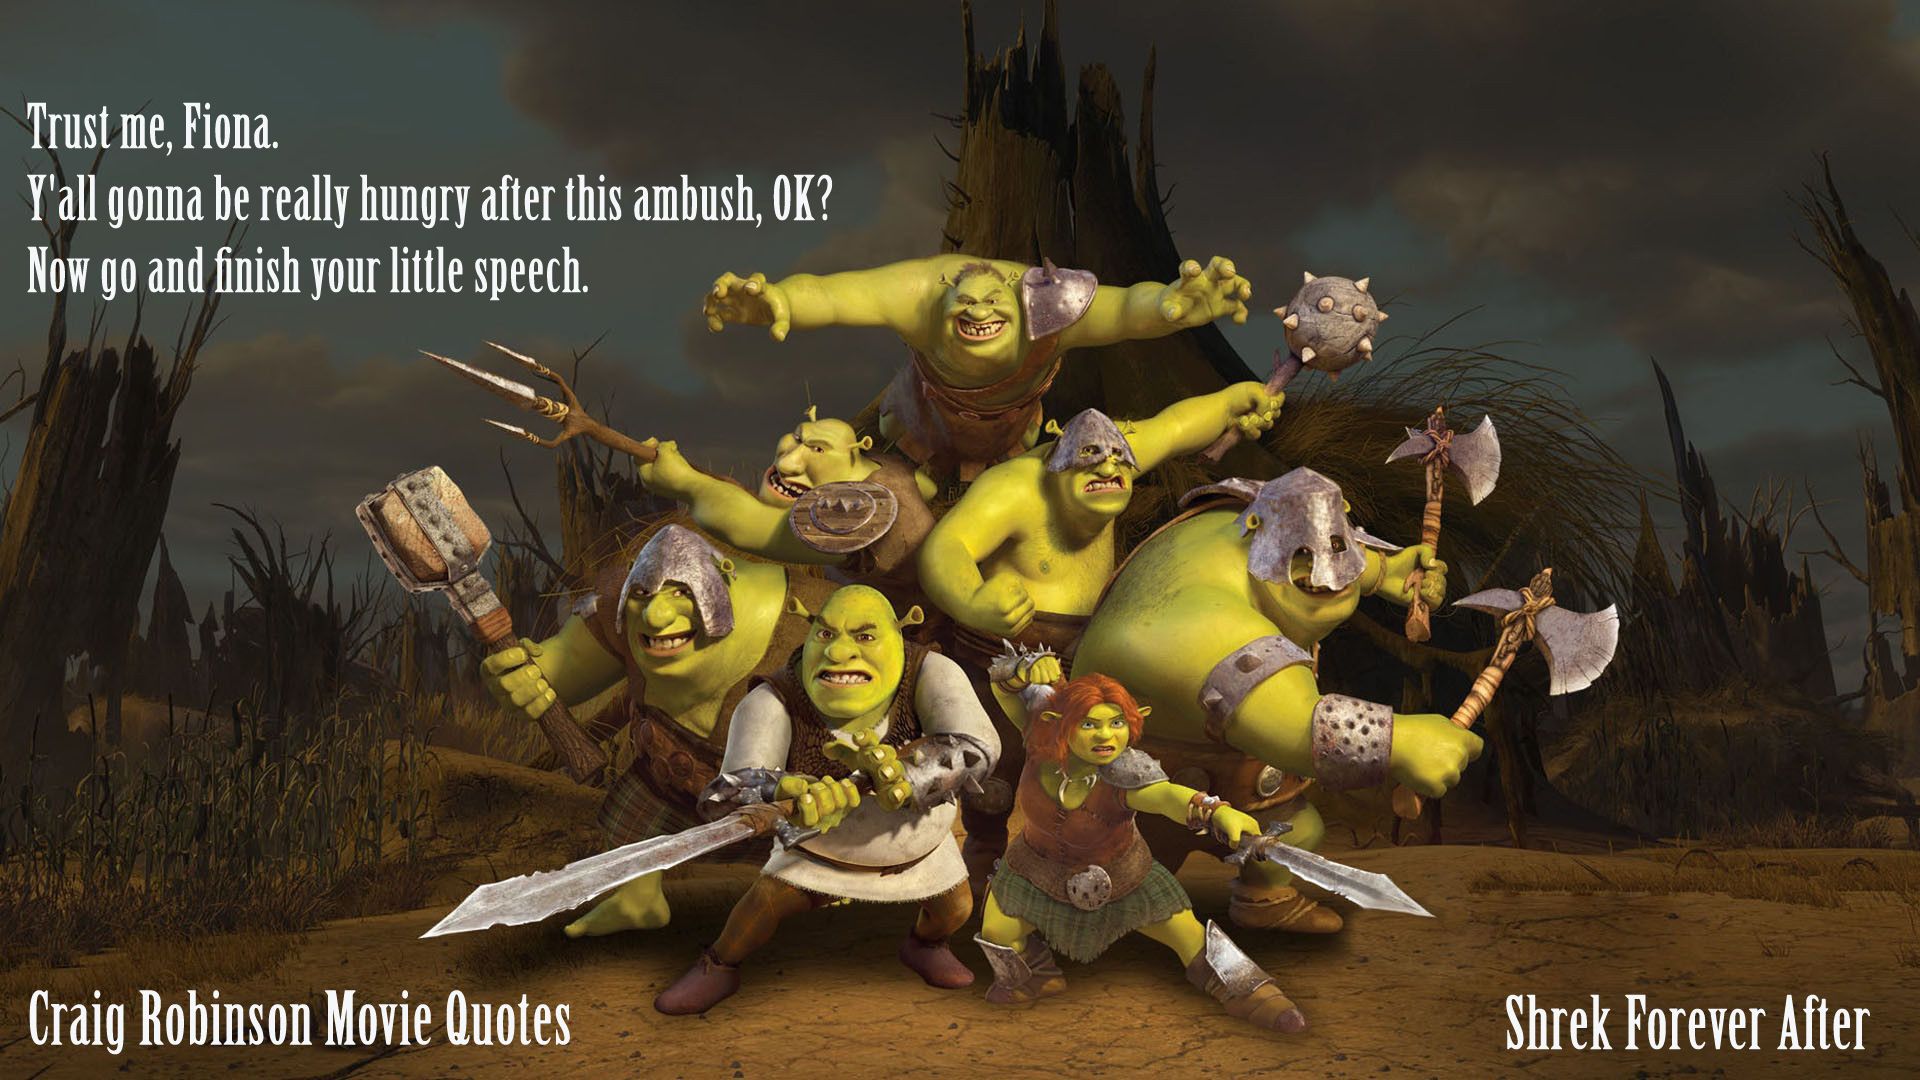 Craig Robinson Movie Quote. Shrek, Robinsons movie